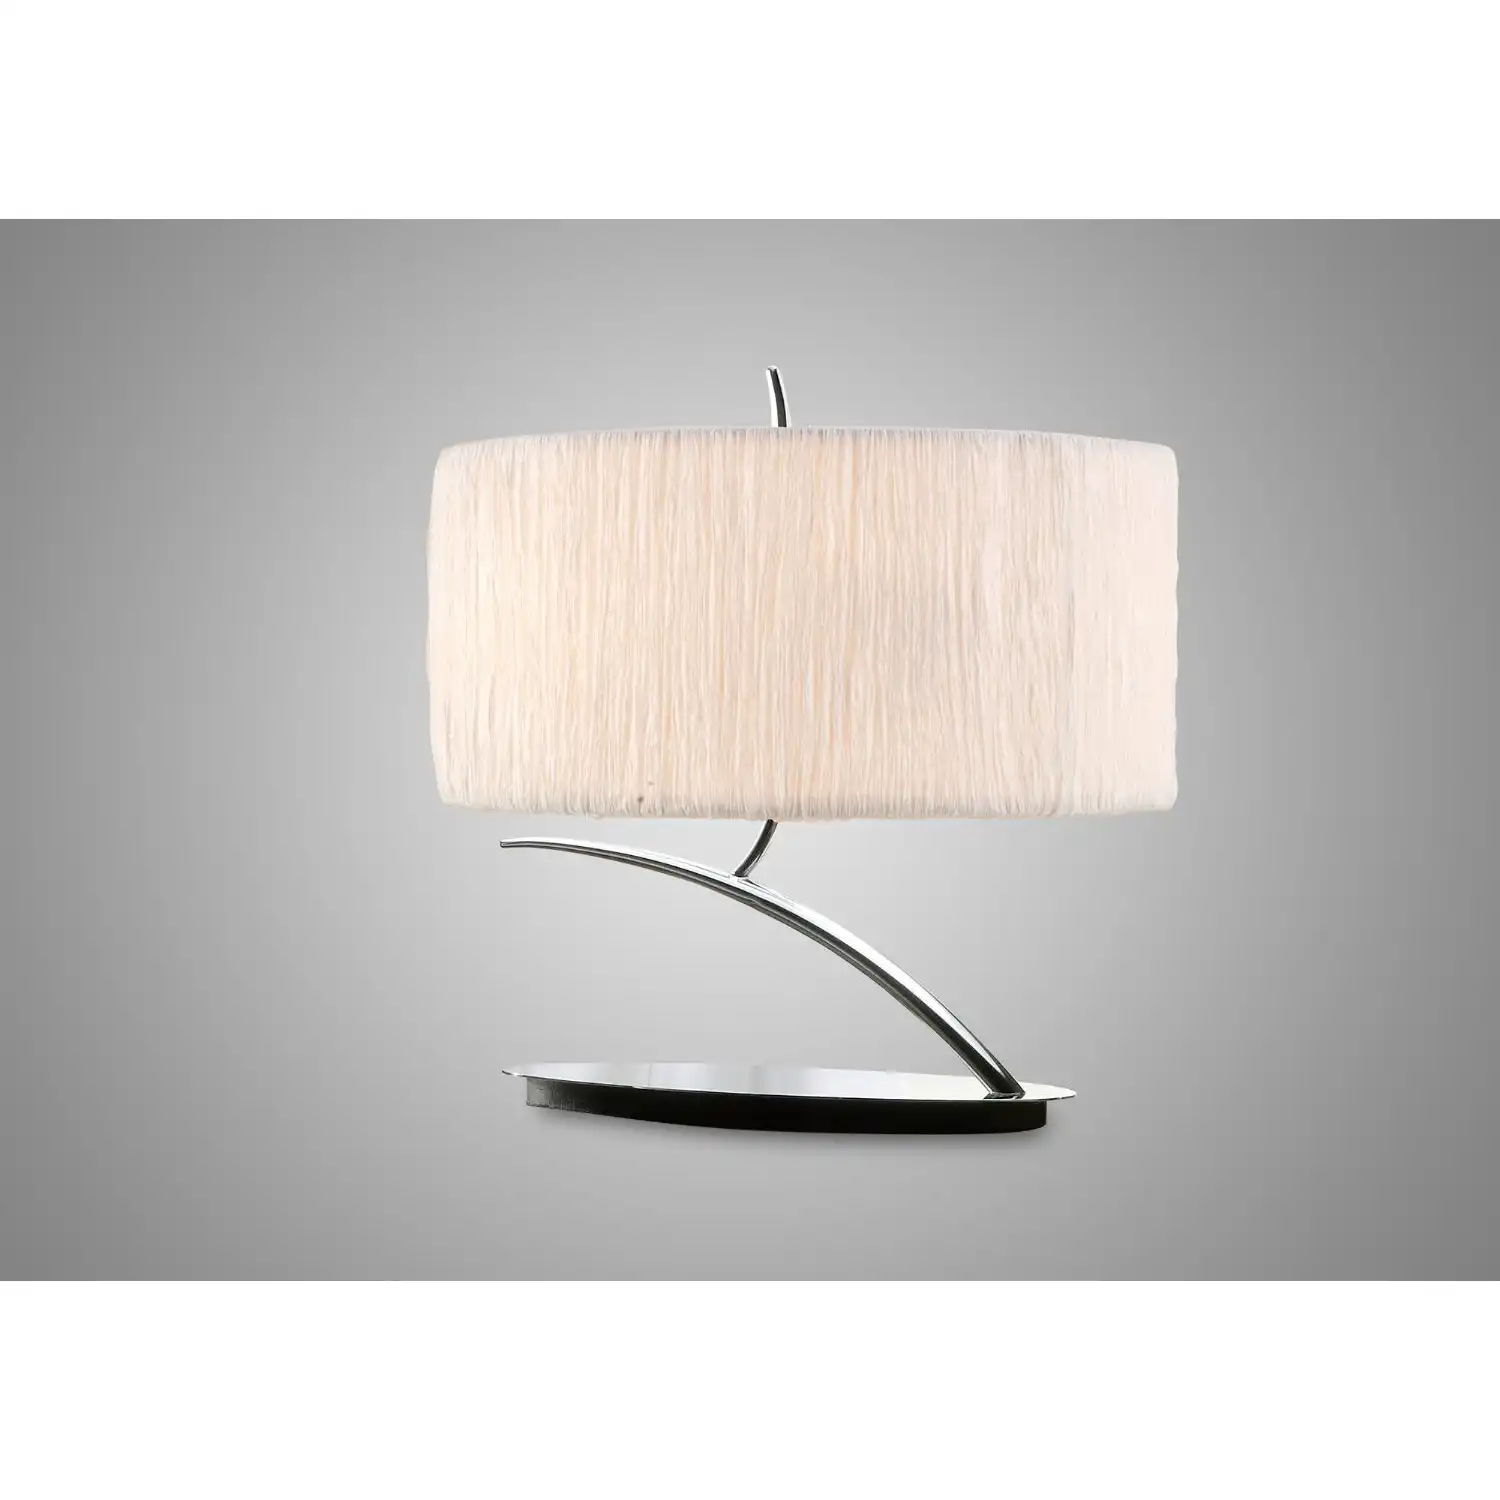 Eve Table Lamp 2 Light E27 Small, Polished Chrome With White Oval Shade